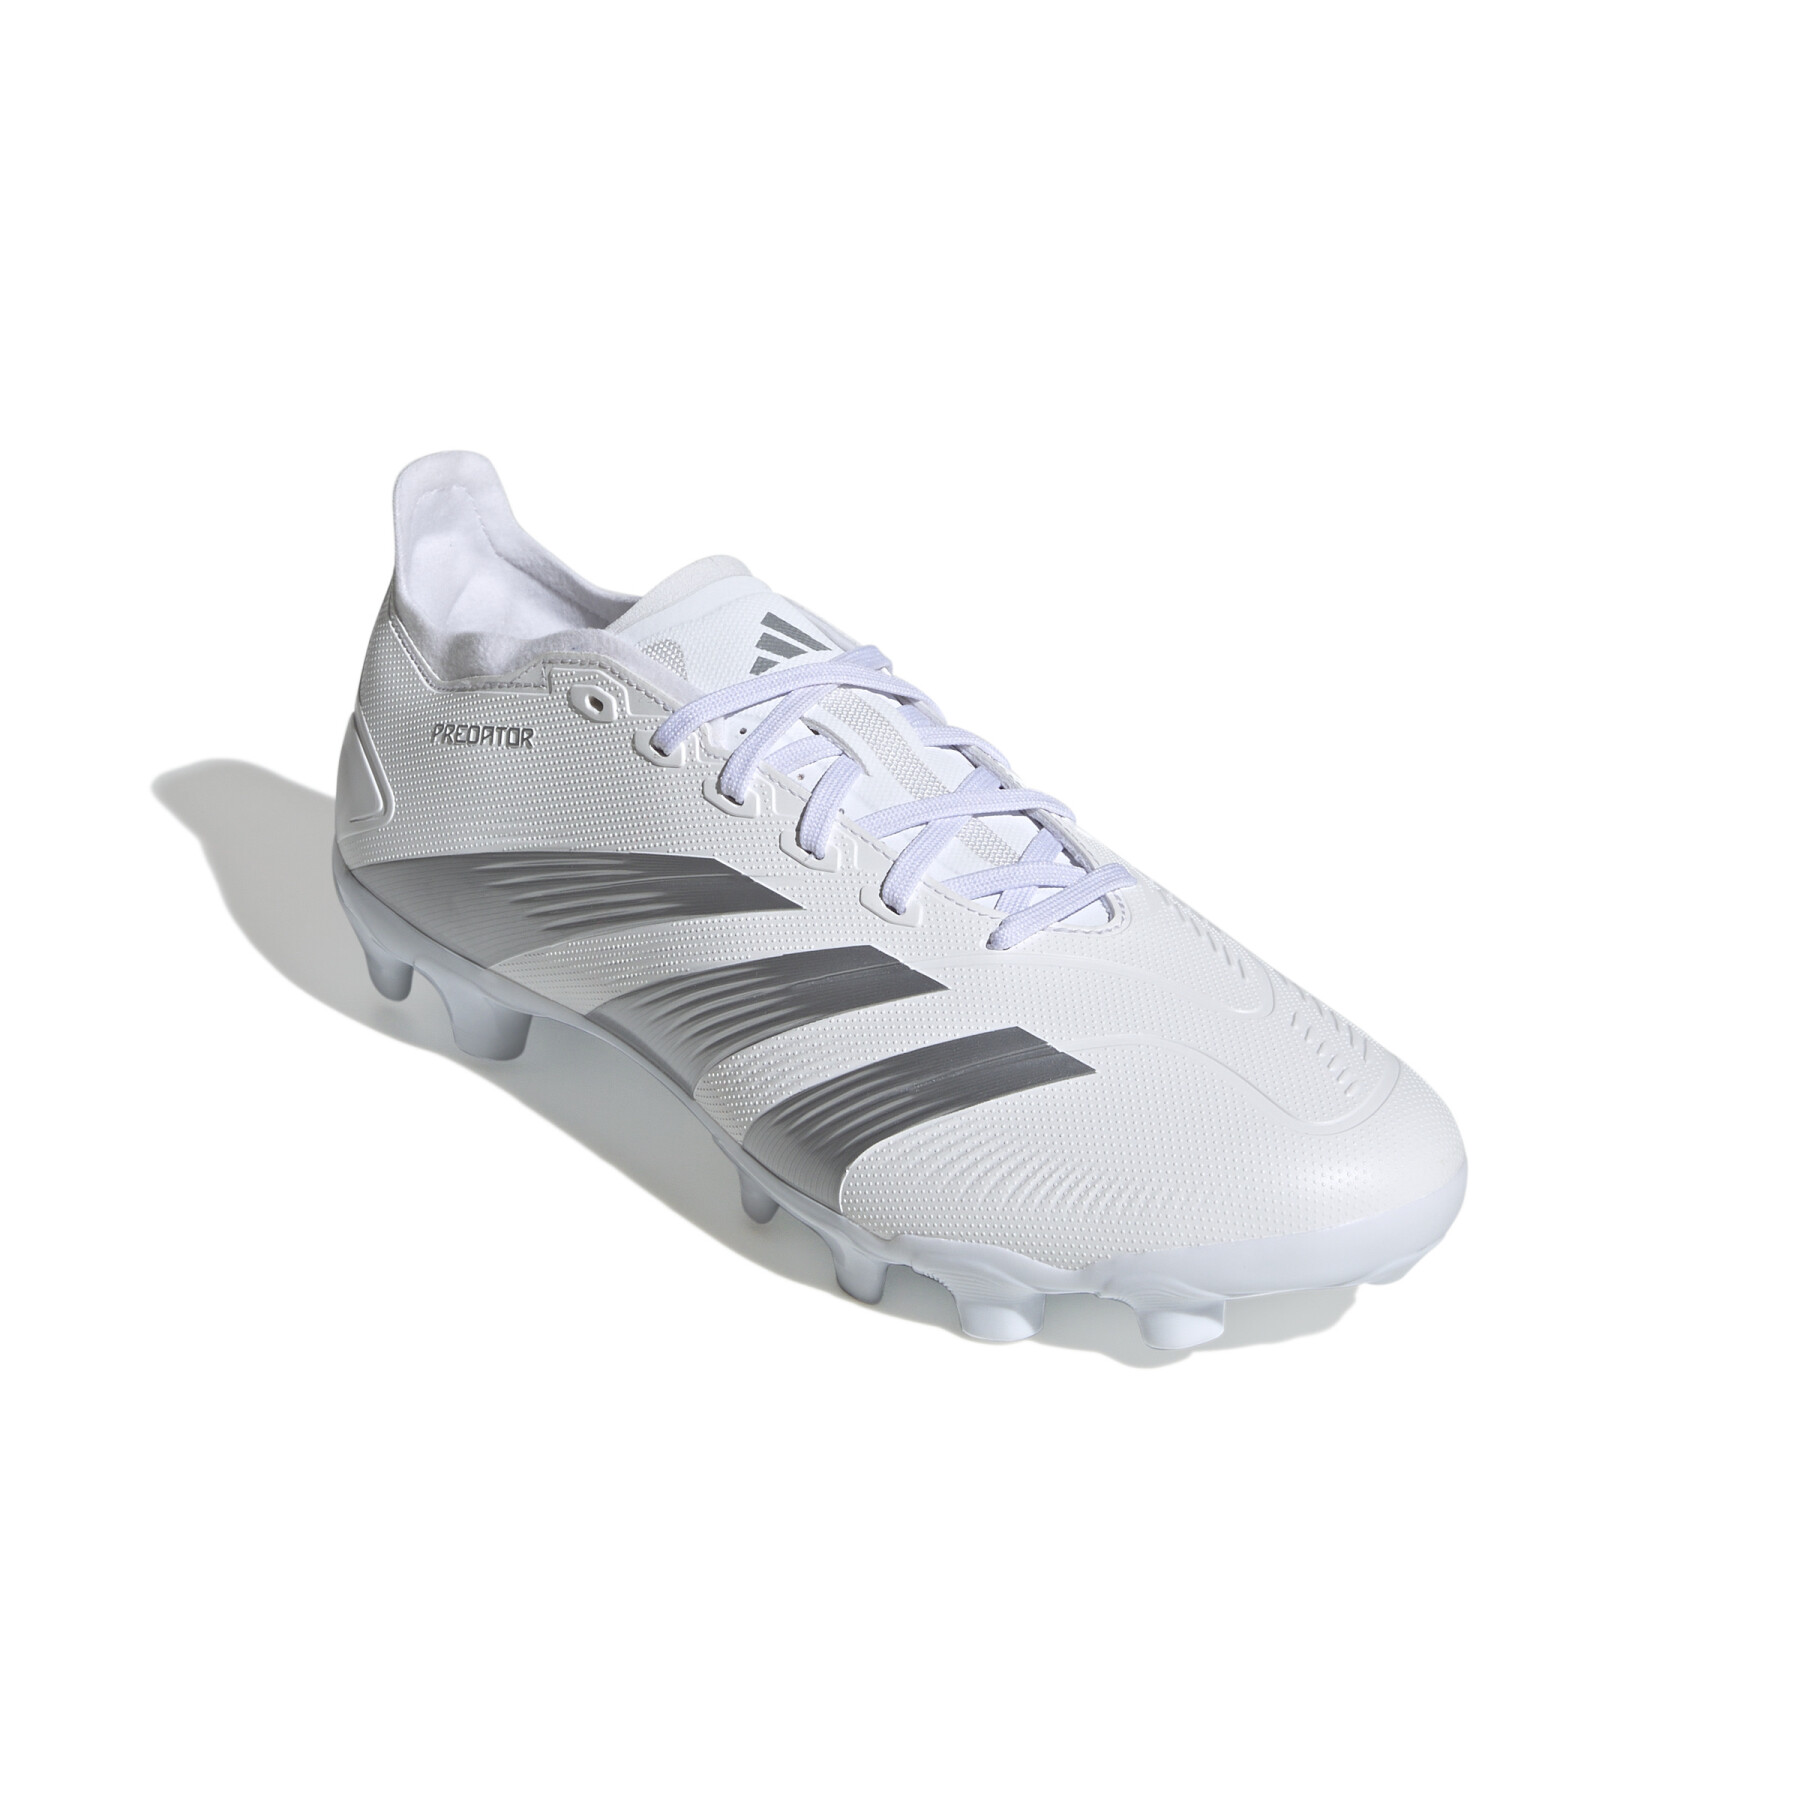 Chaussures de football adidas Predator League MG